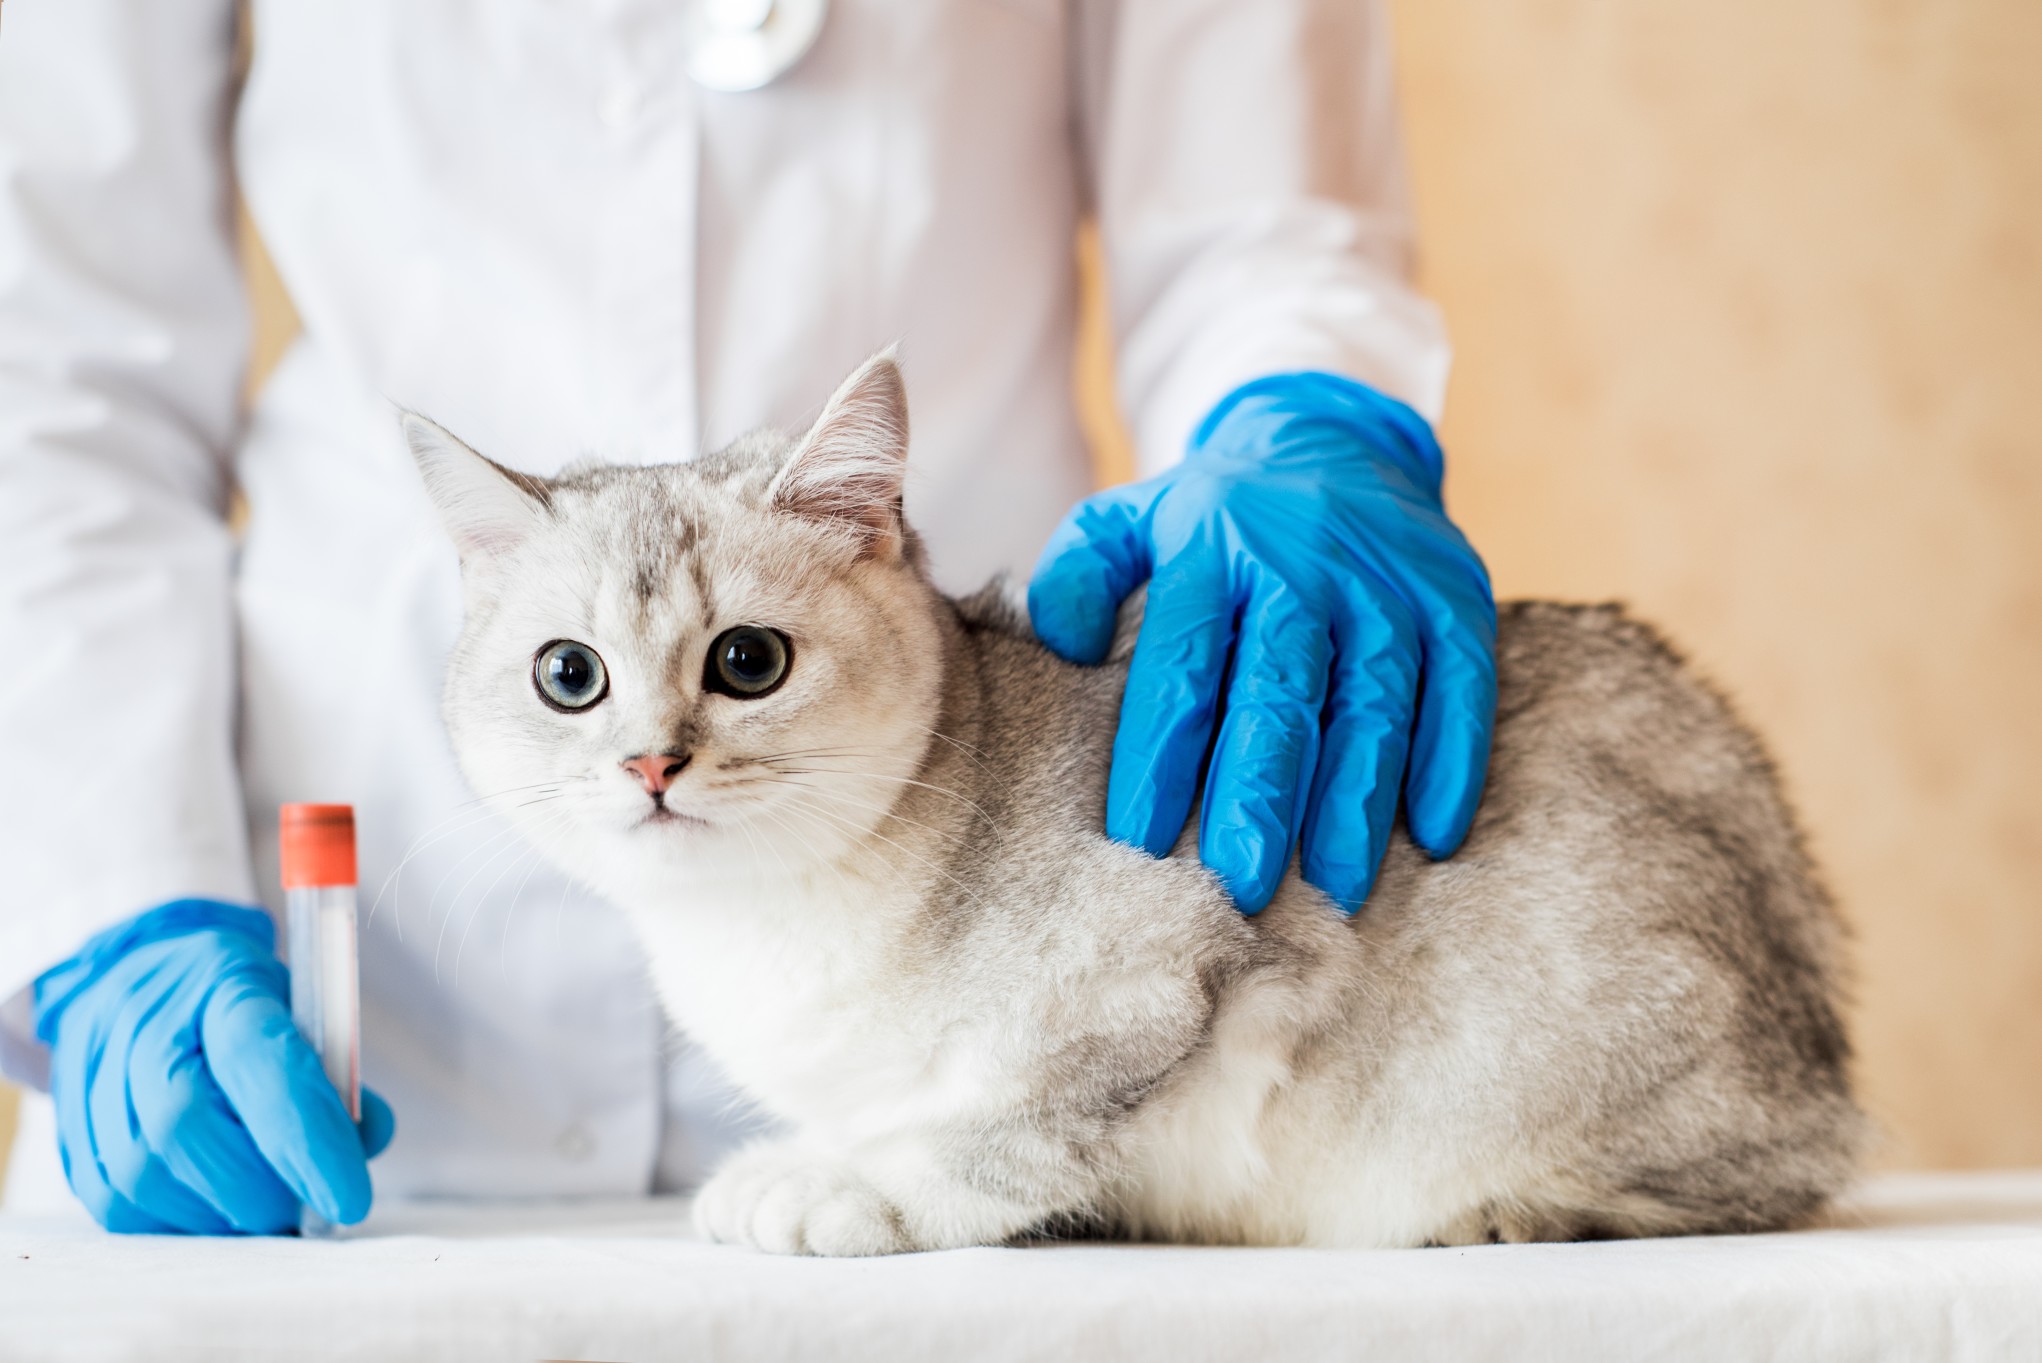 Medicina veterinaria: todo lo que debes saber sobre esta profesión 